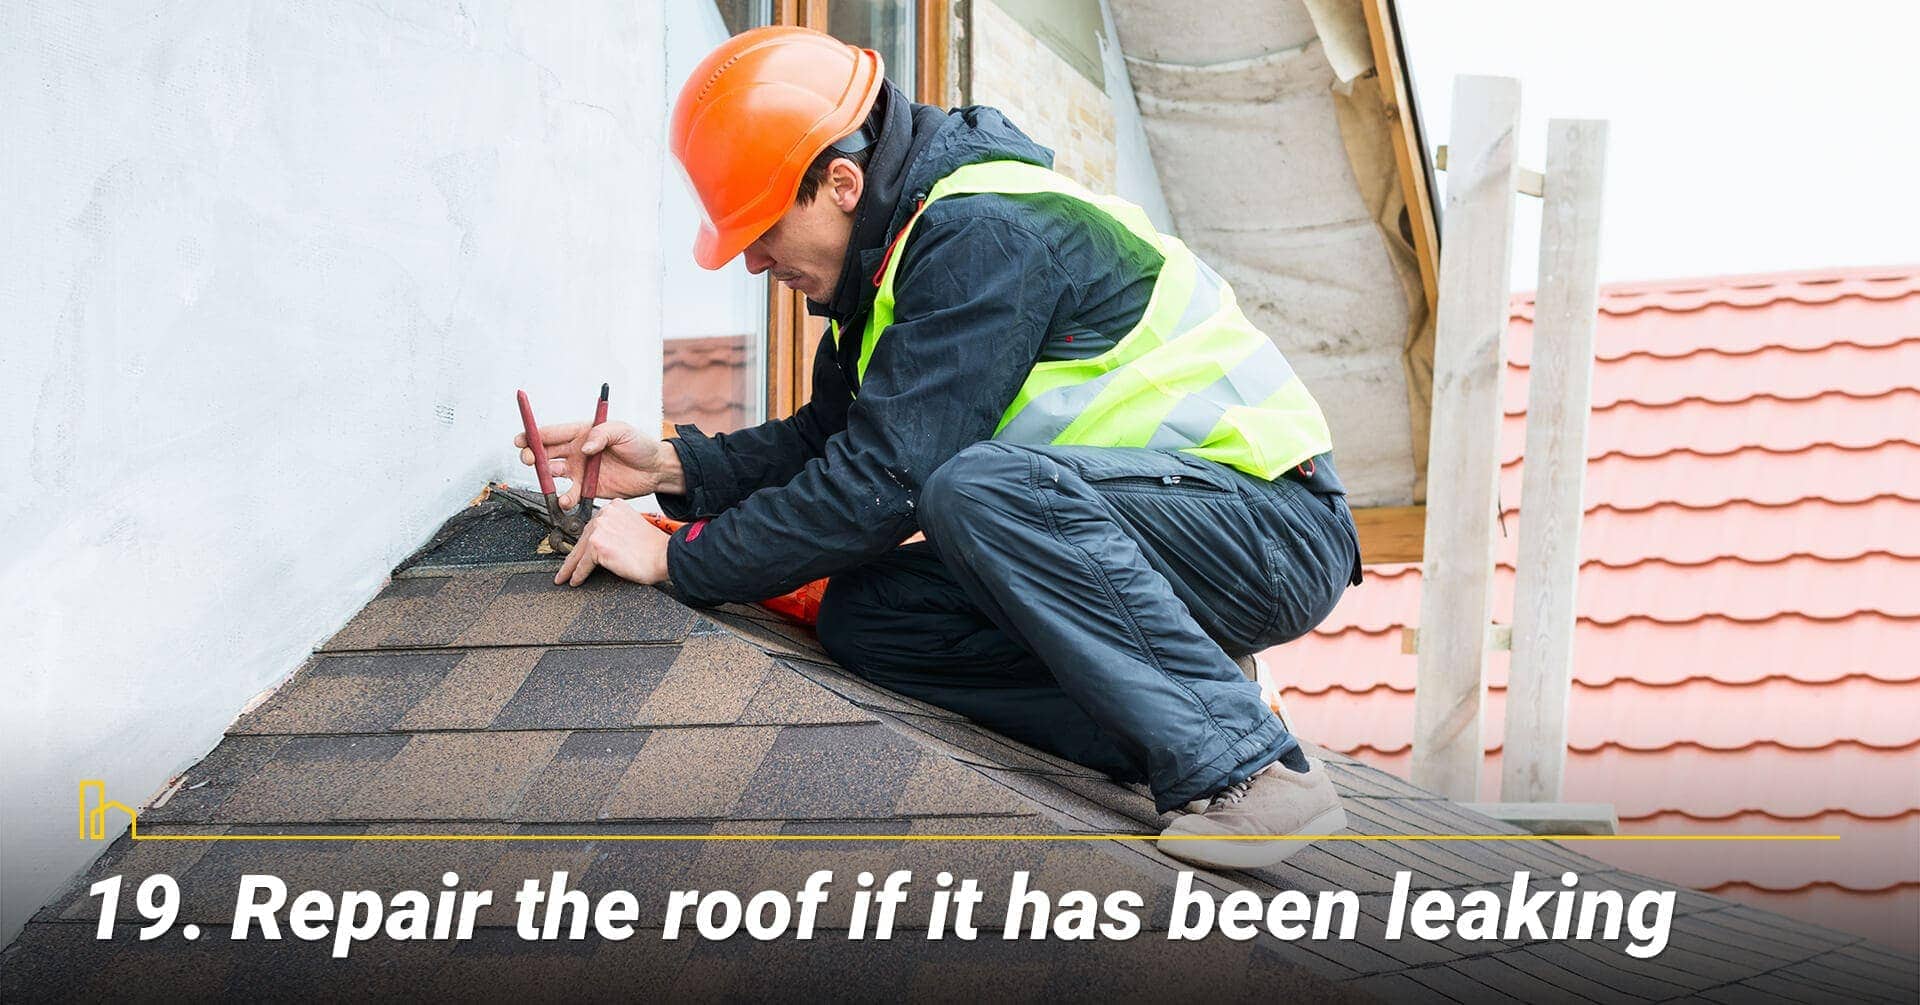 Repair the roof if it has been leaking, waterproof the roof